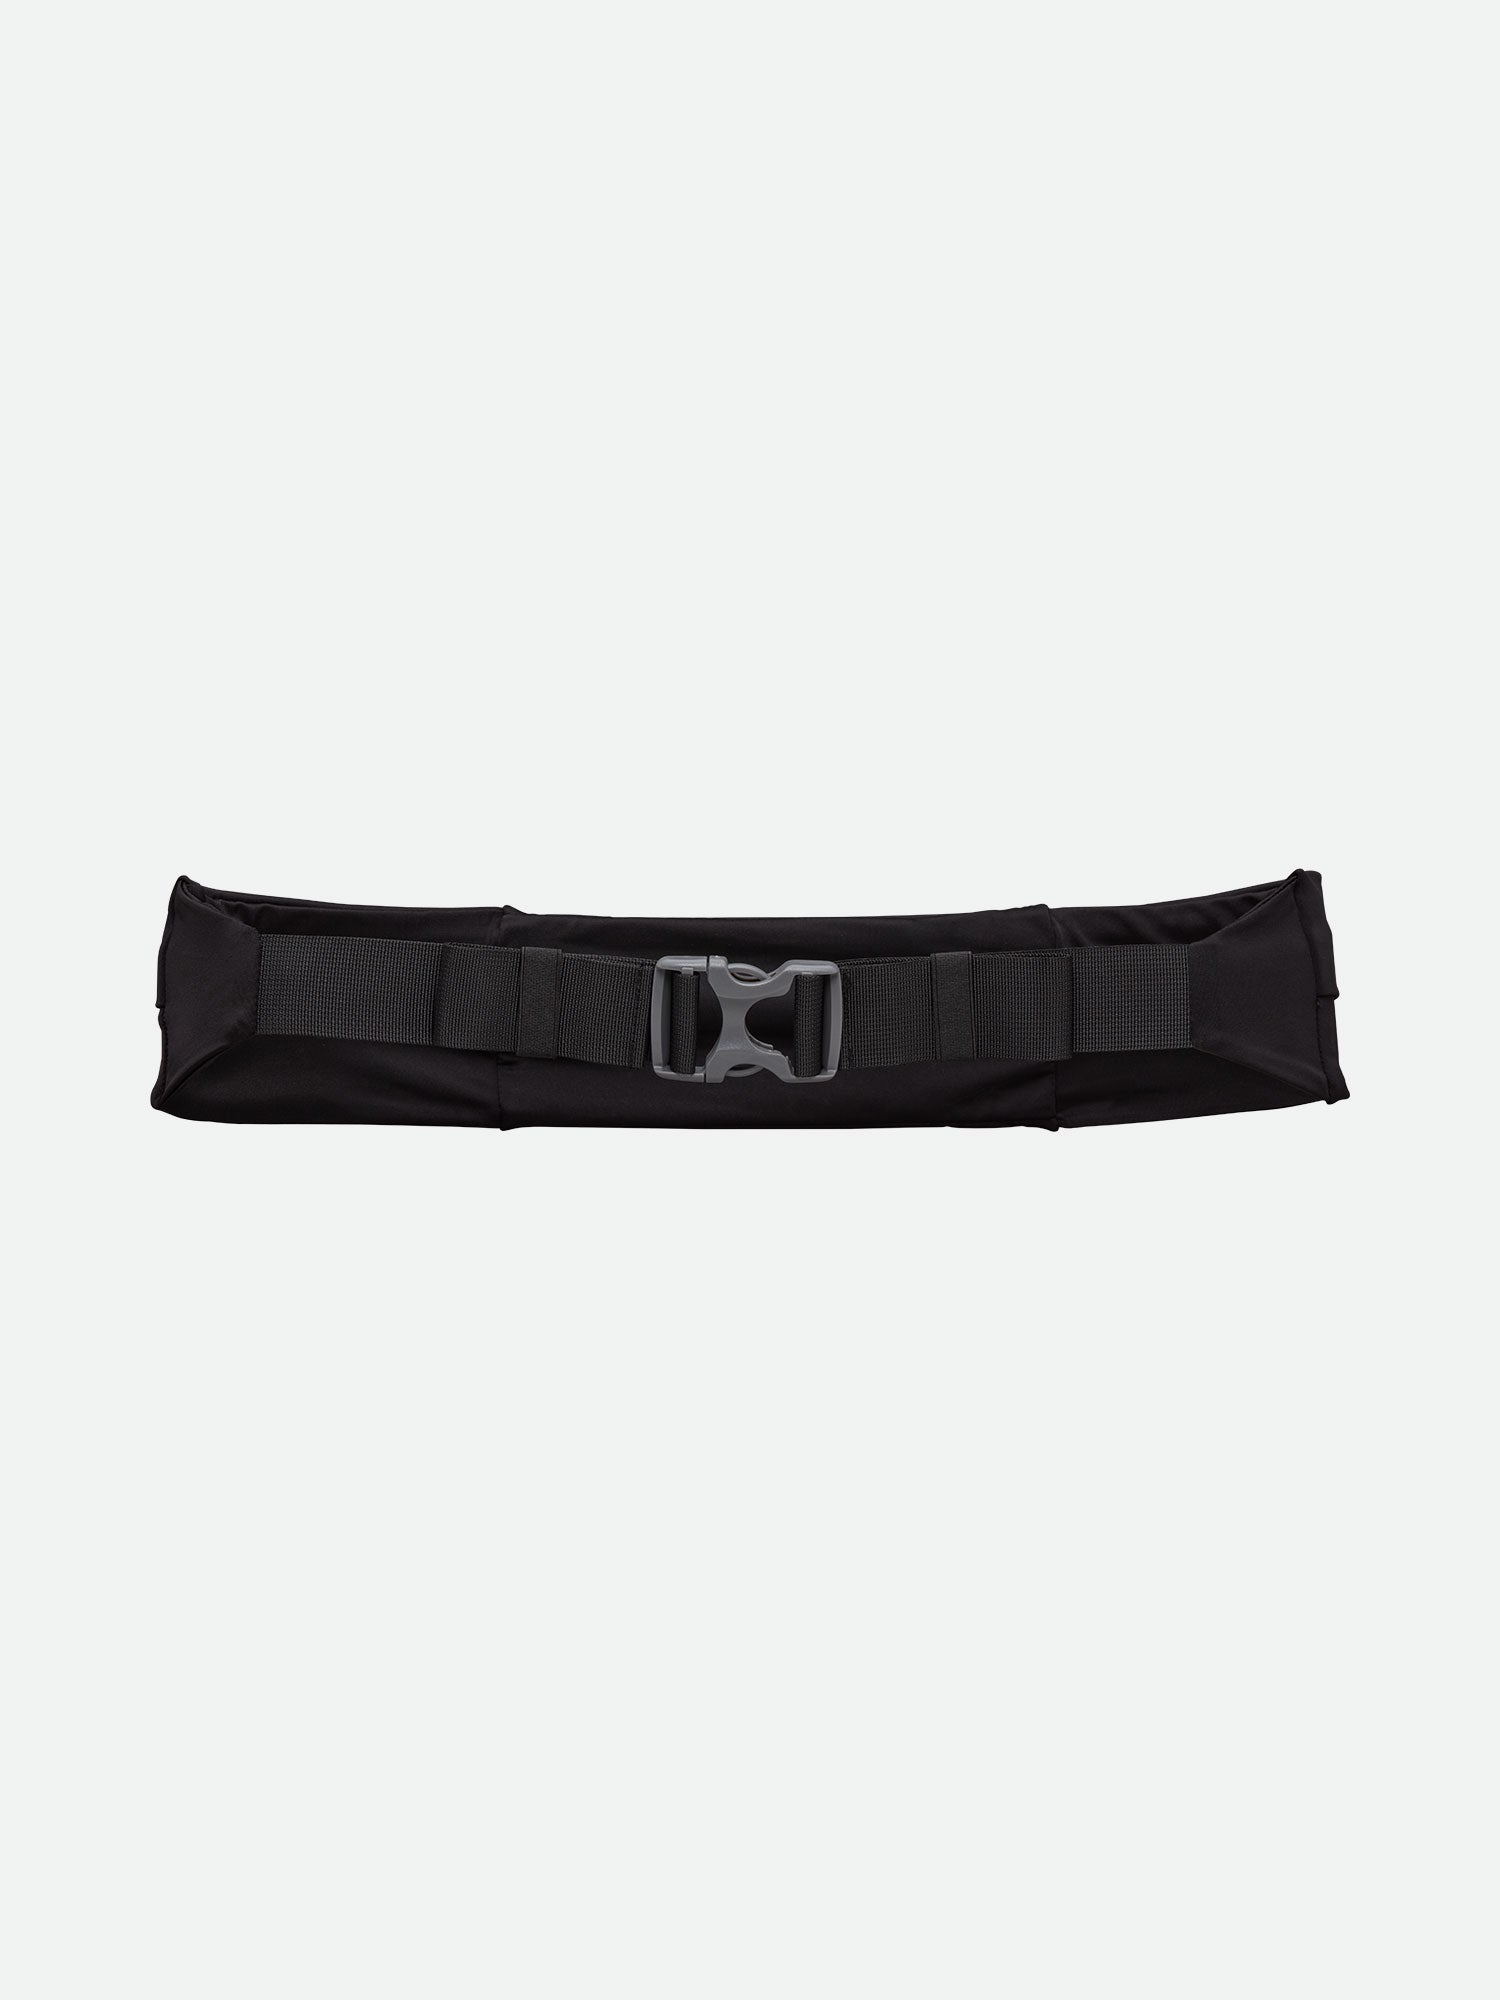 Adjustable-Fit Zipster Training Belt